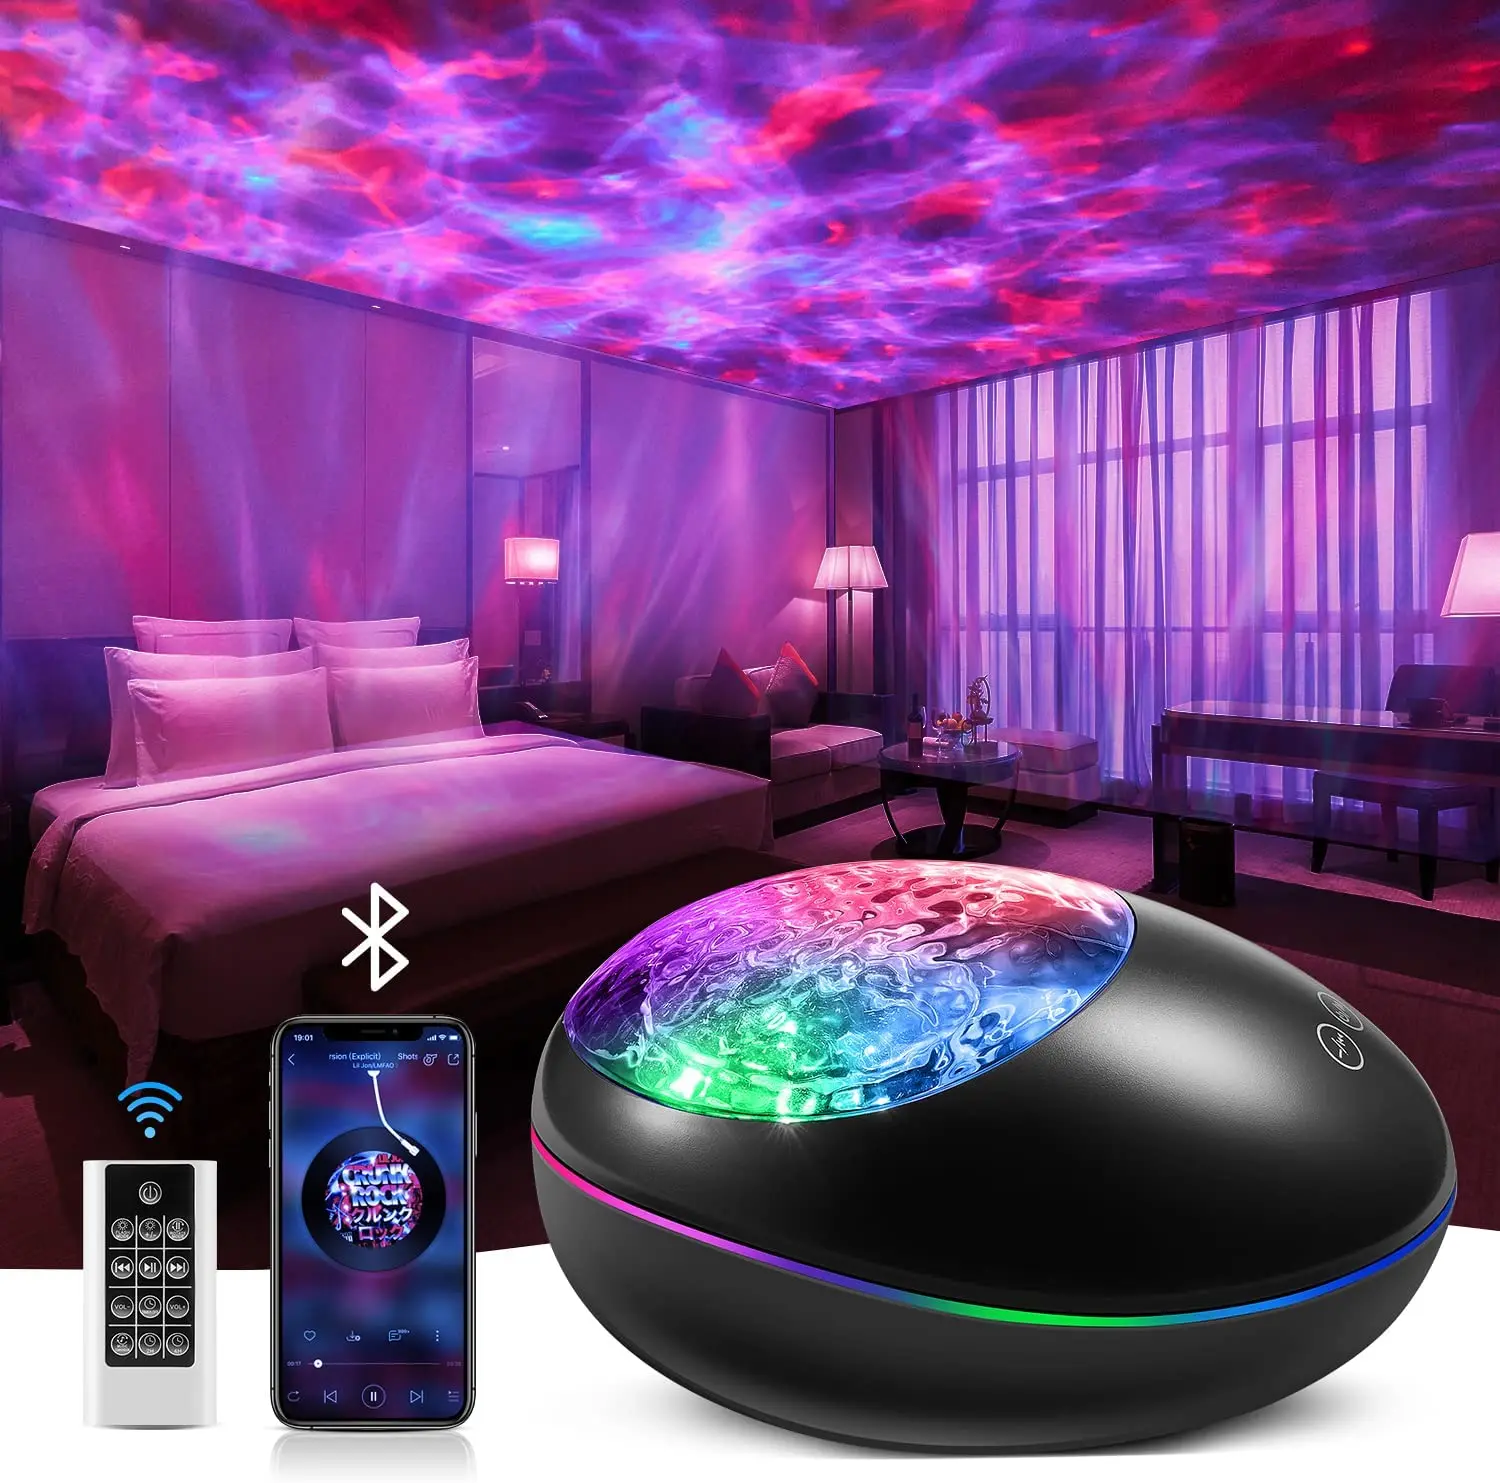 Remote Control 8 Lighting Modes Bluetooth Music Speaker Sea Ocean Wave Nebula Ceiling Galaxy Projector Led Star Night Light